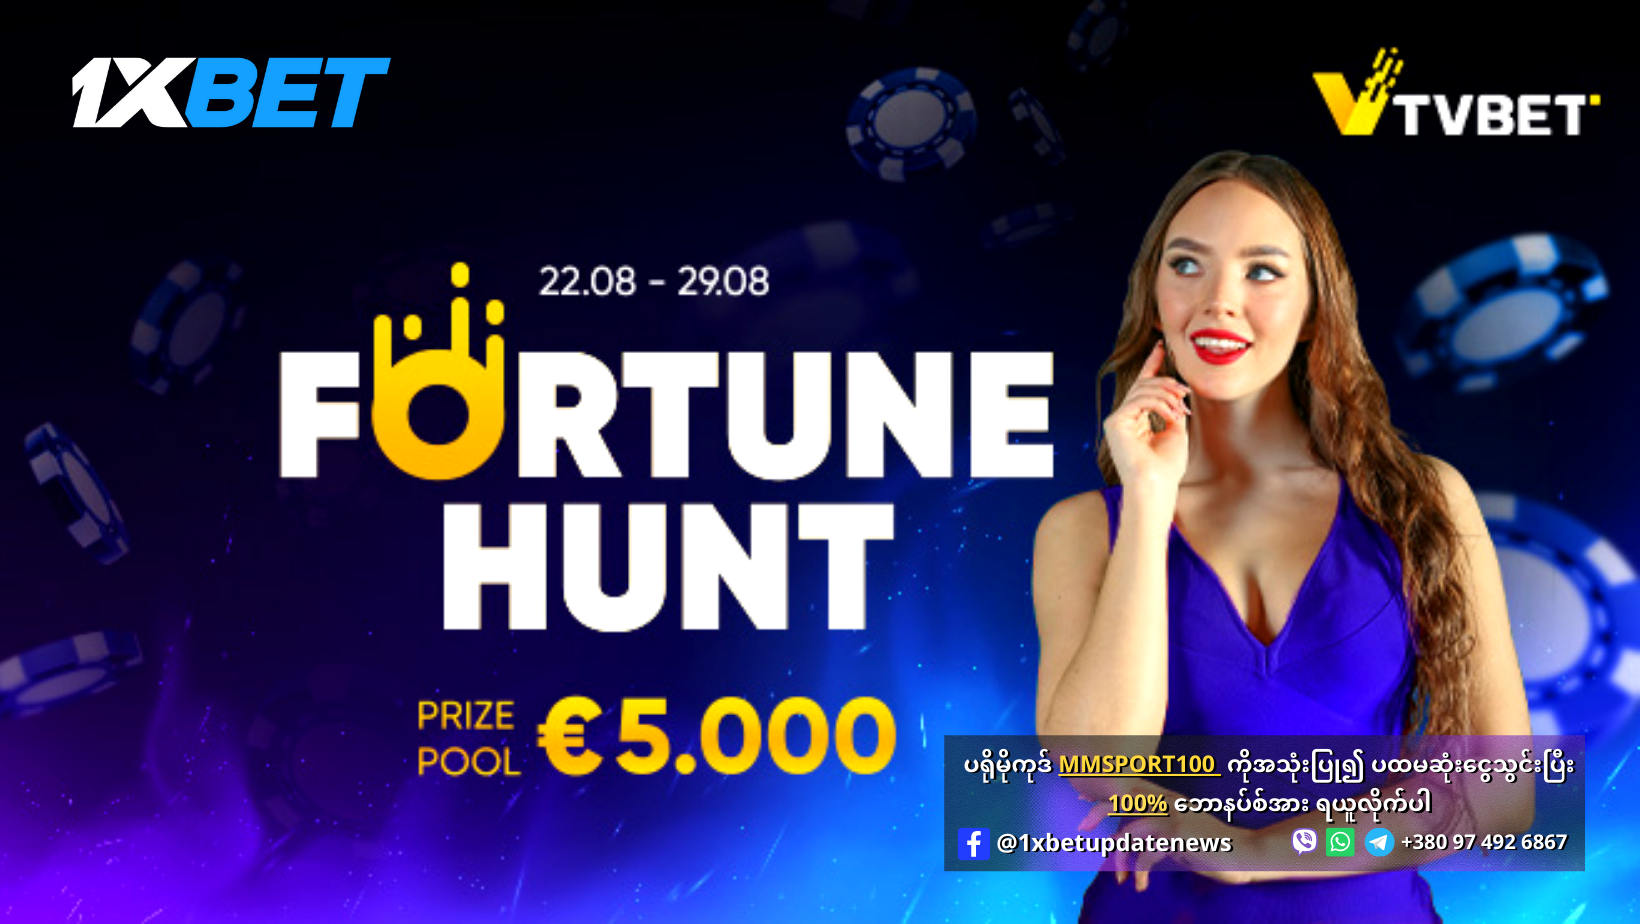 Fortune Hunt 1xBet Offer